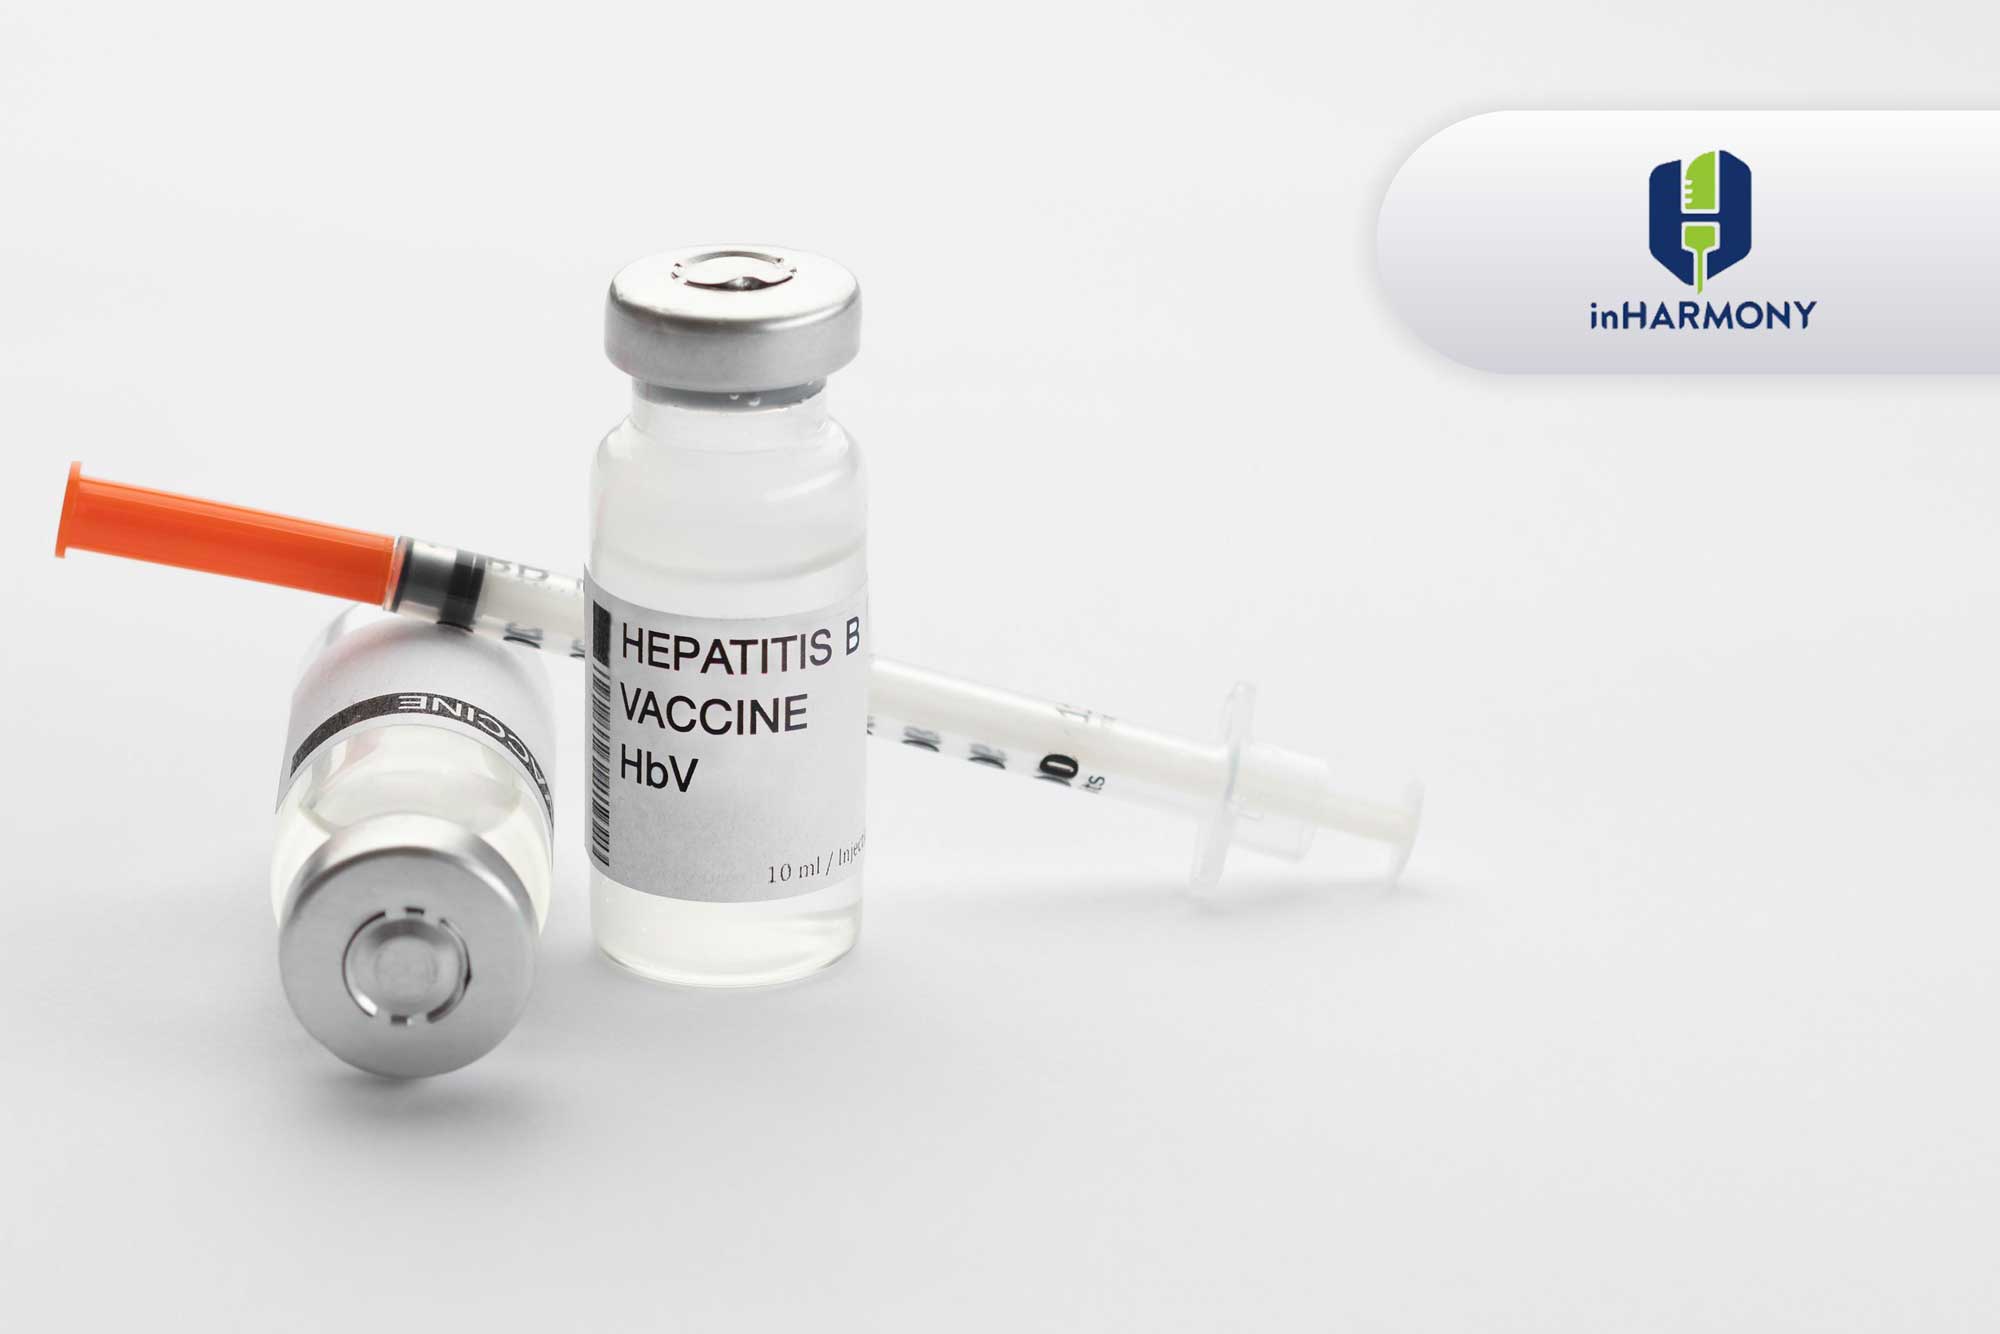 vaksin-hepatitis-B-inharmony_1690947198.jpg